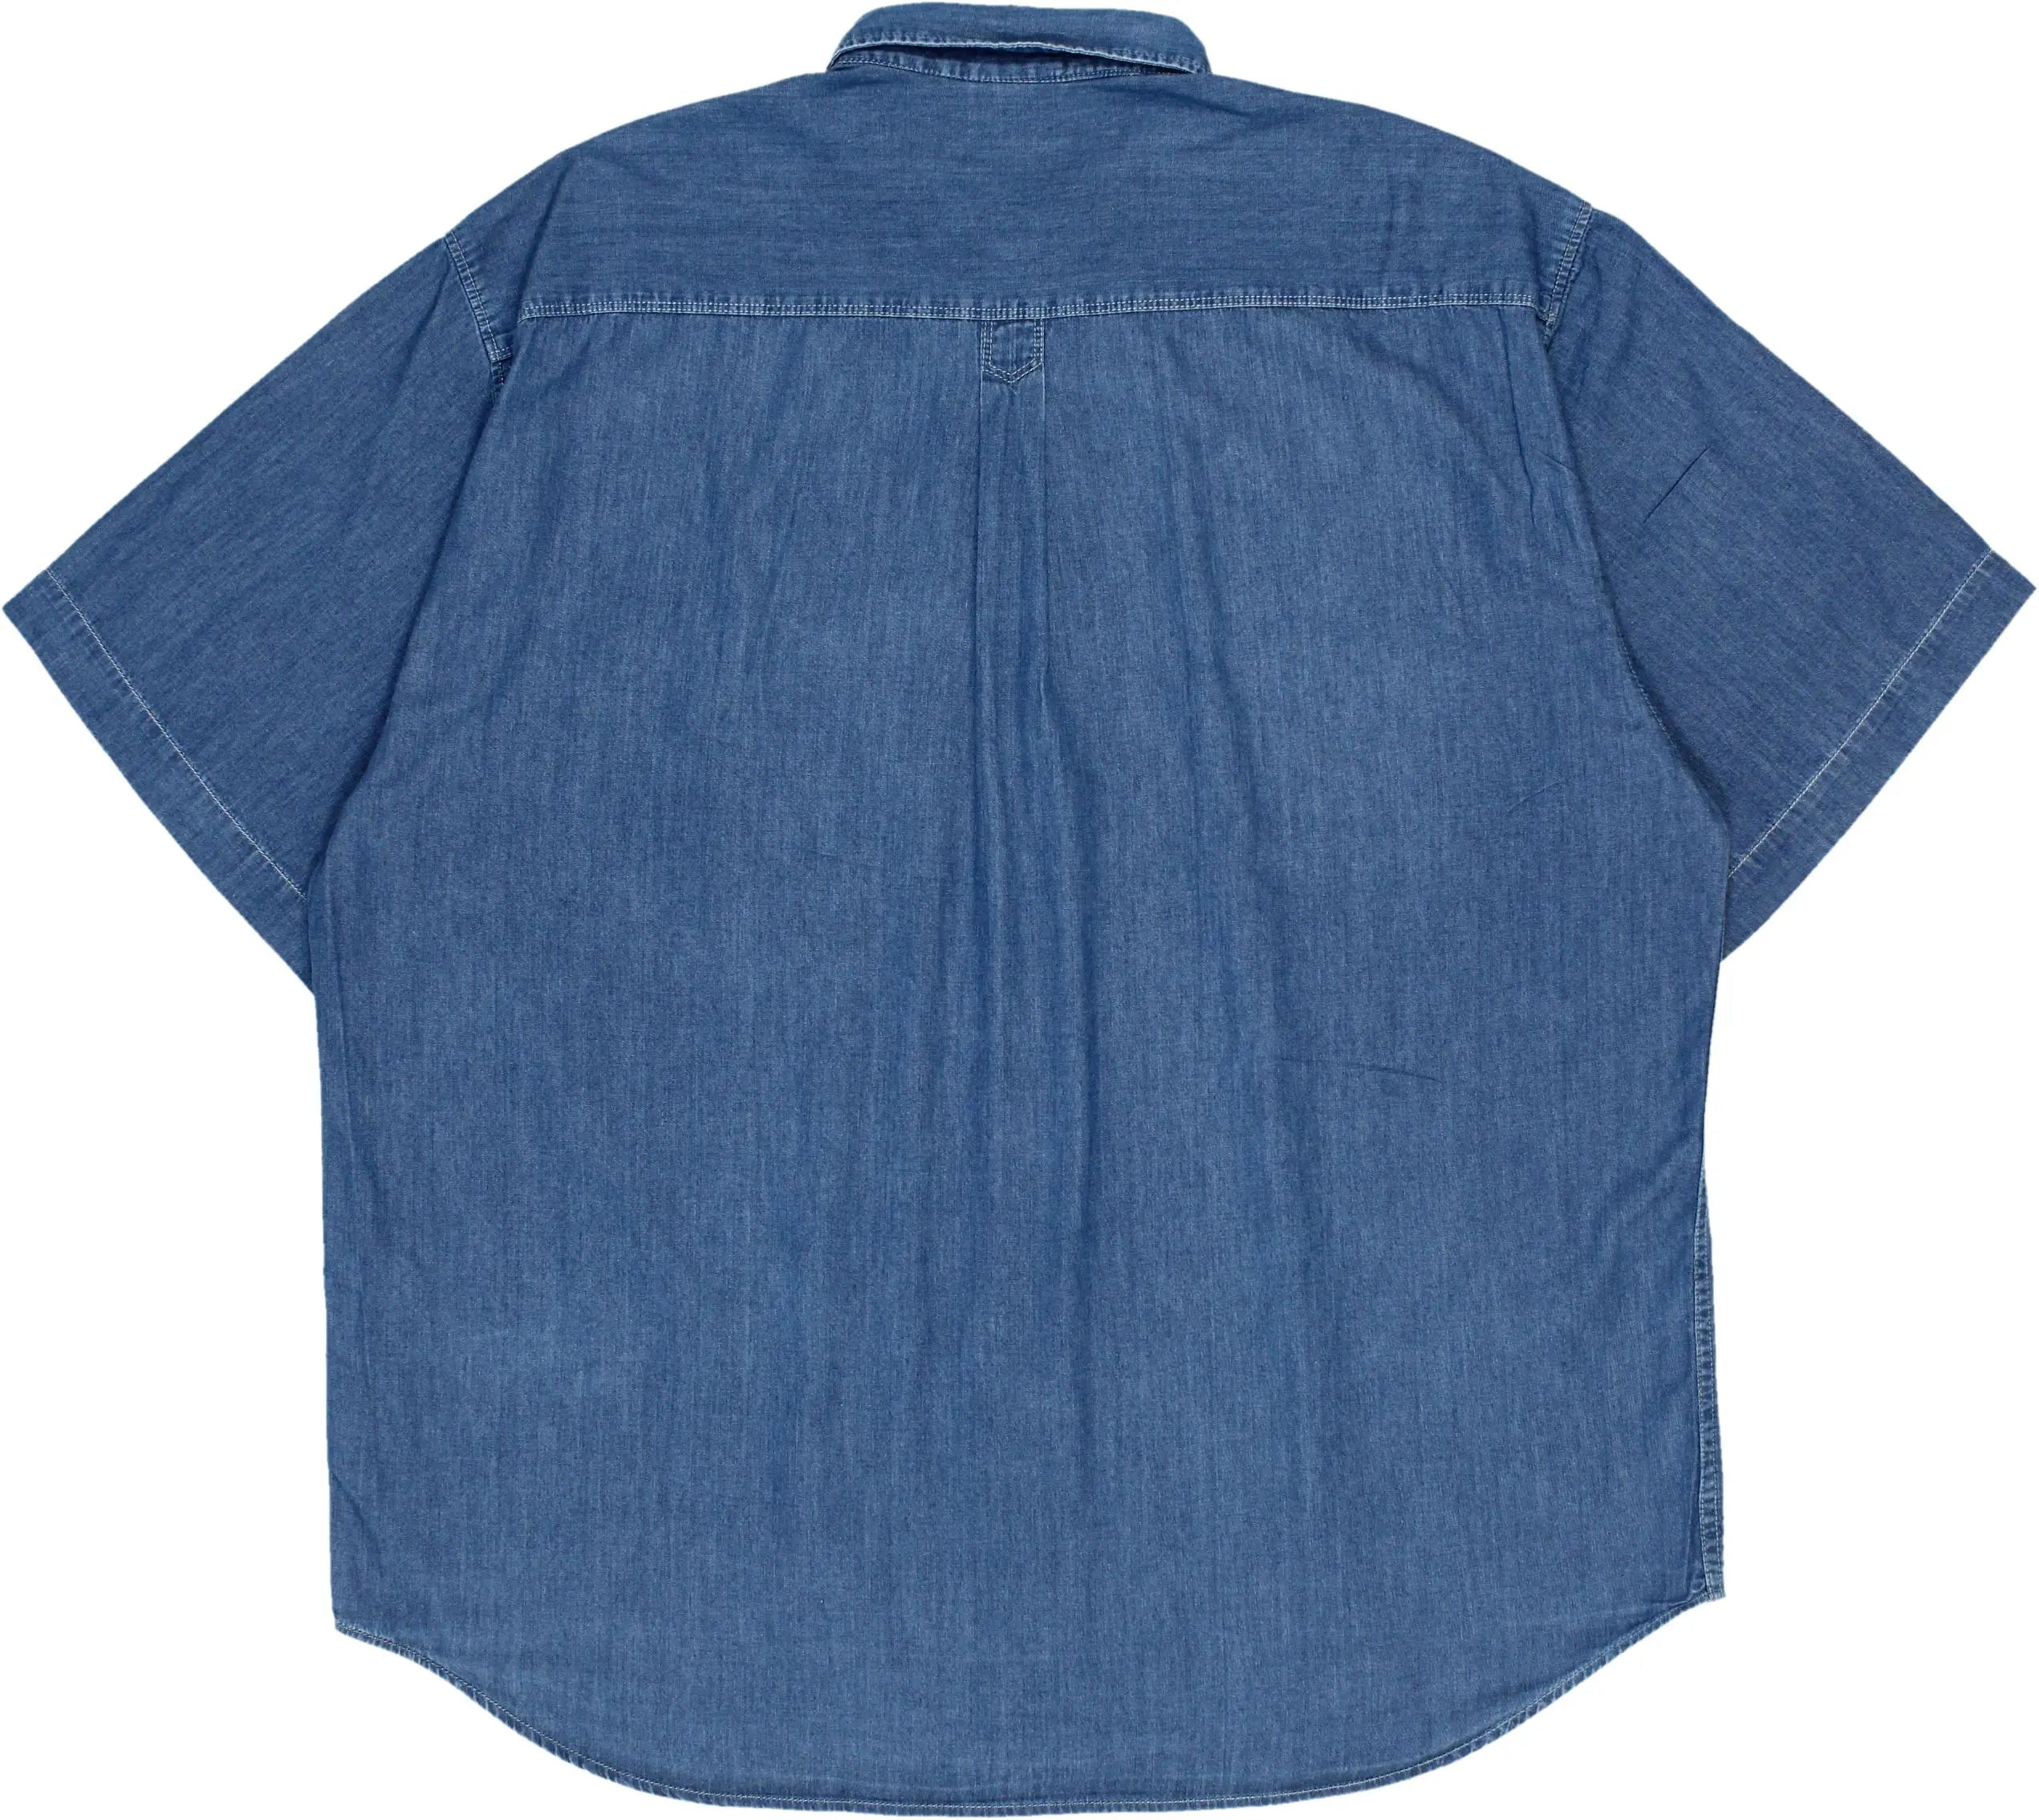 Walbusch - Vintage Denim Short Sleeve Shirt- ThriftTale.com - Vintage and second handclothing